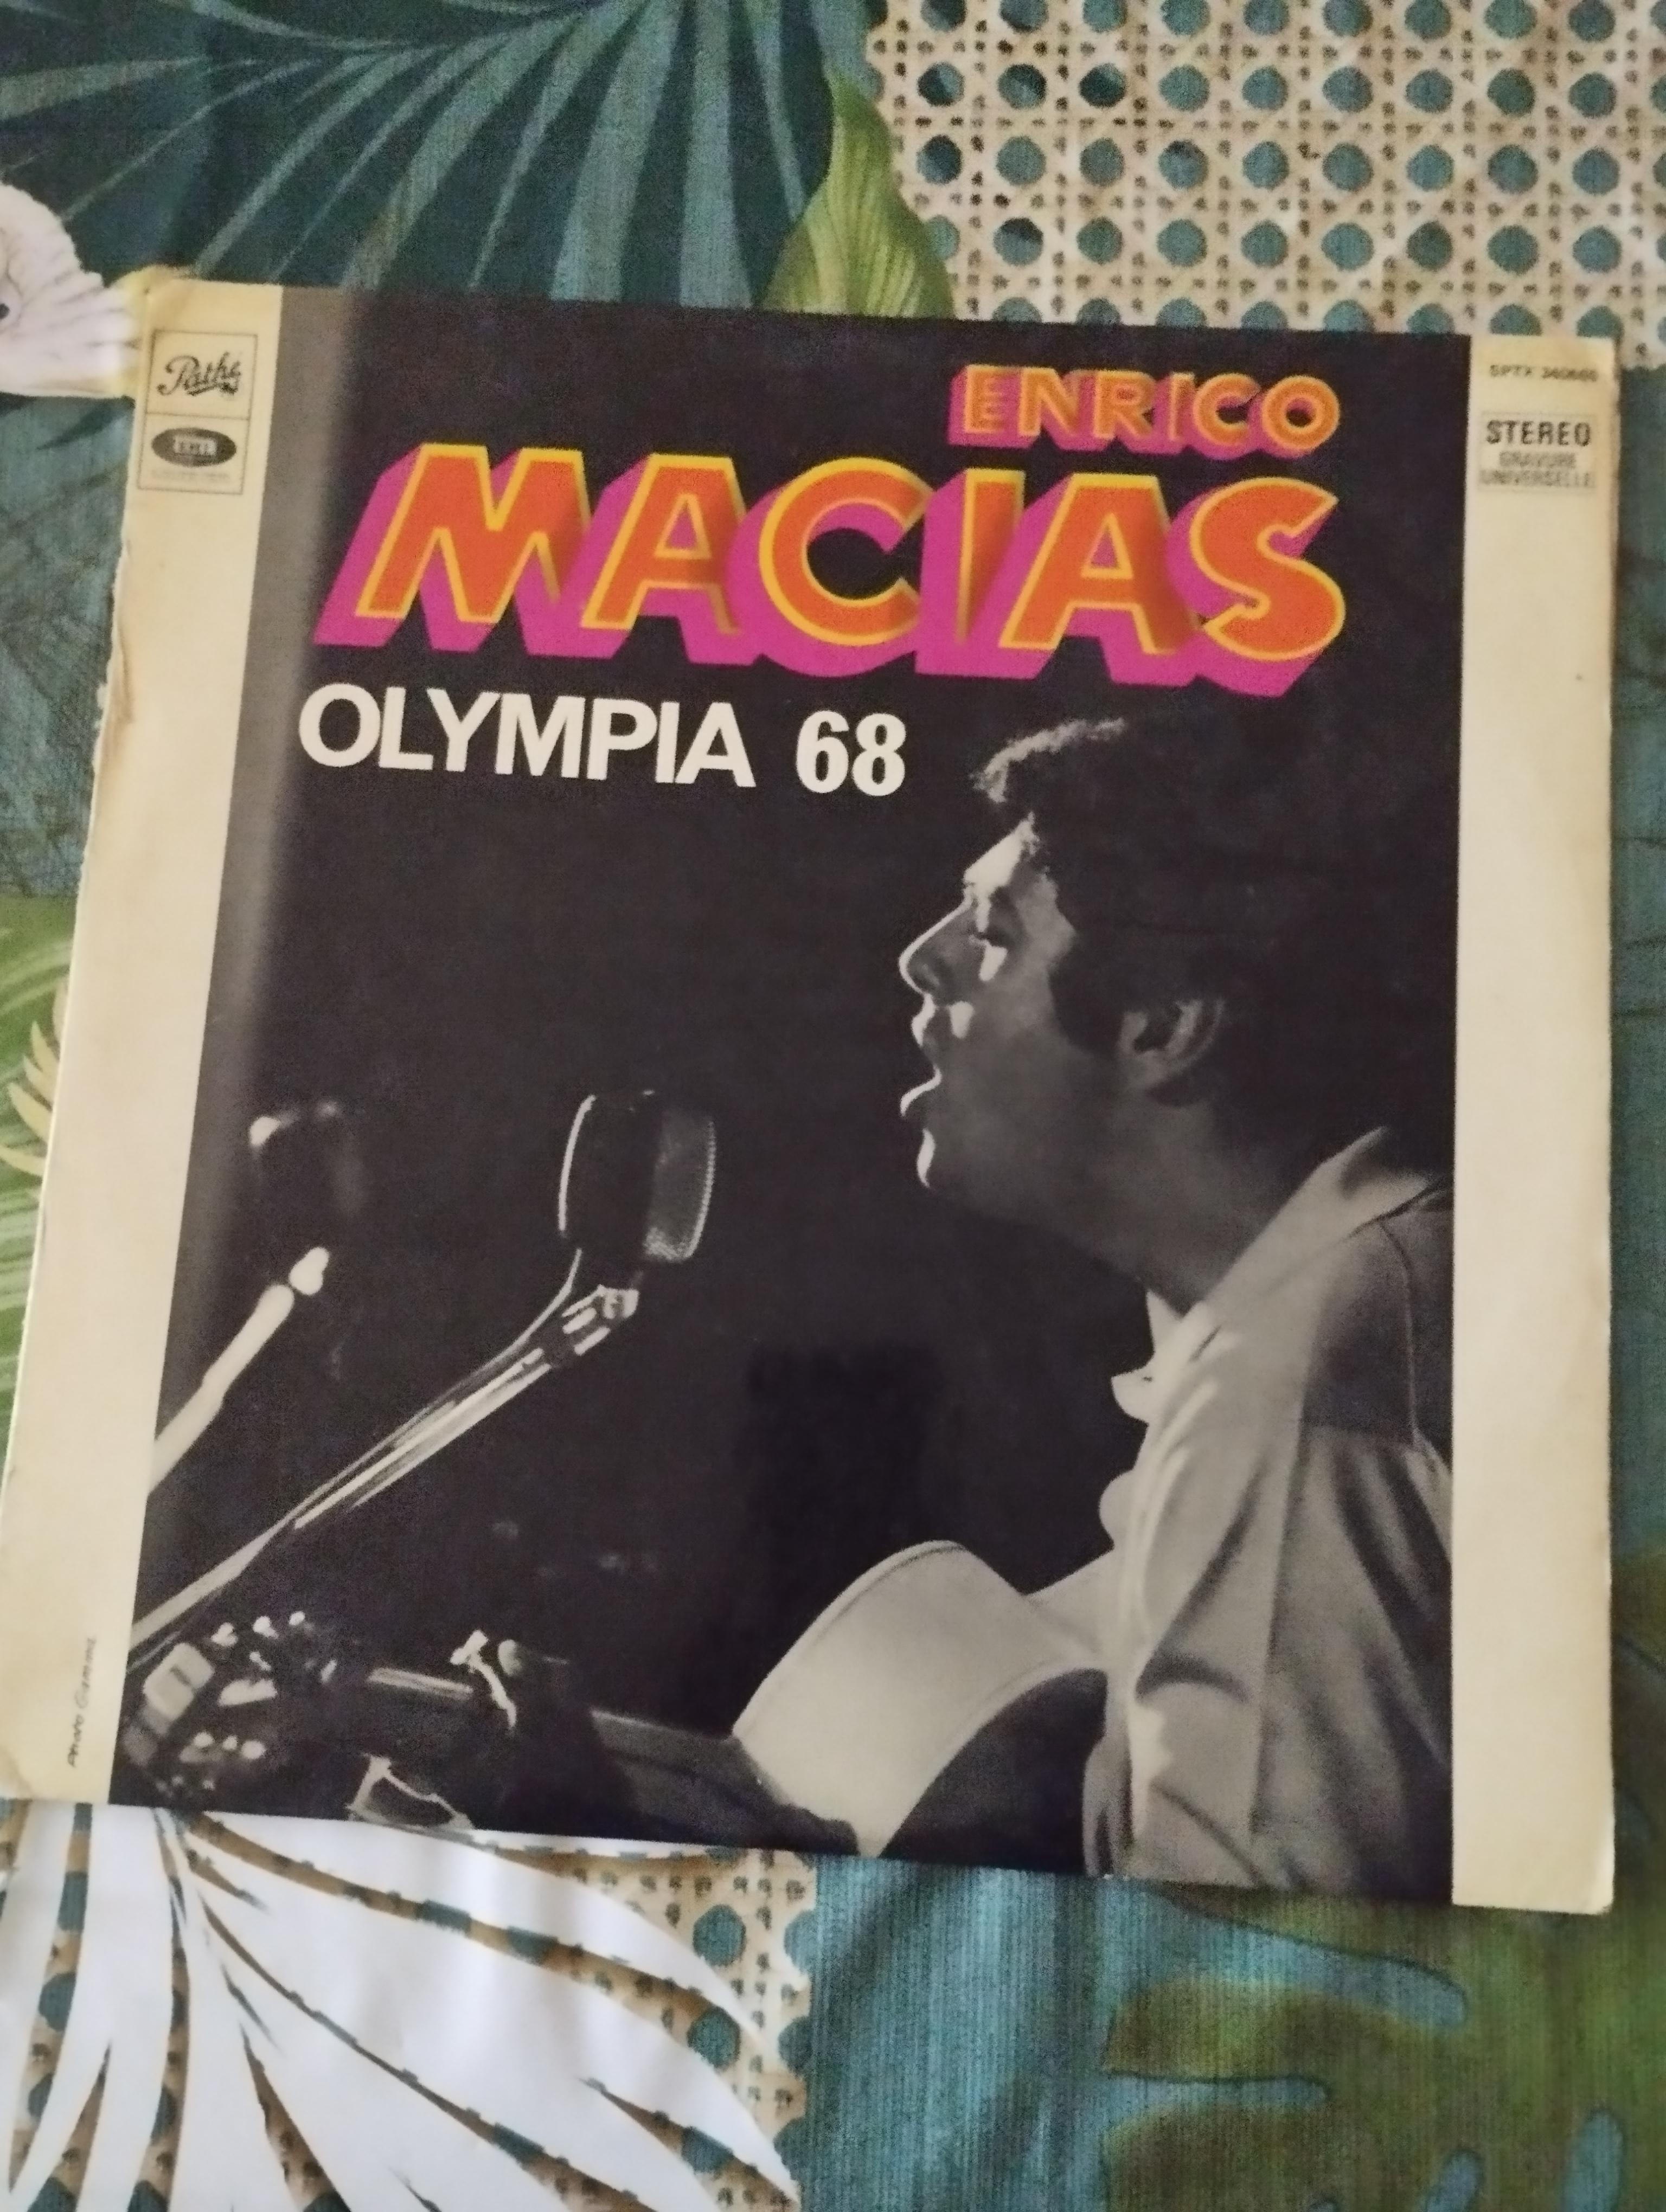 troc de troc disque vinyle 33t enrico macias - olympia 68 image 0